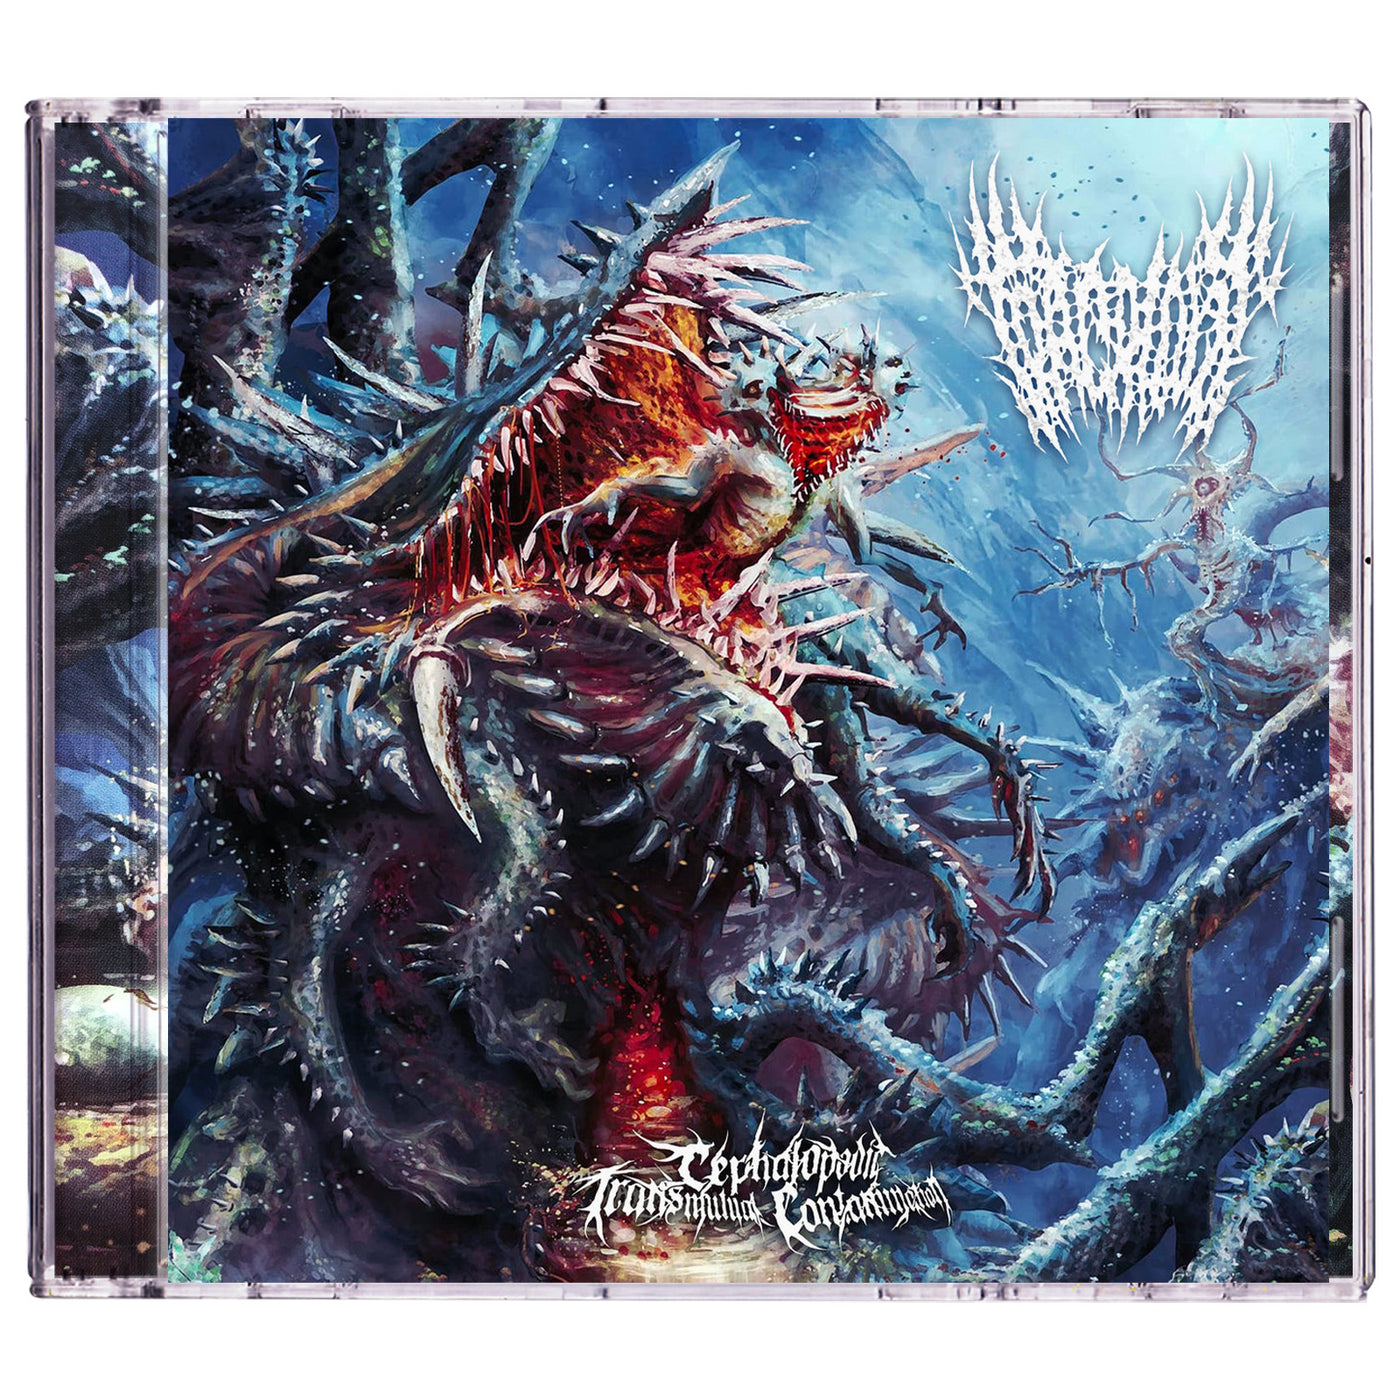 Tracriomy 'Cephalopodic Transmutual Contamination' CD